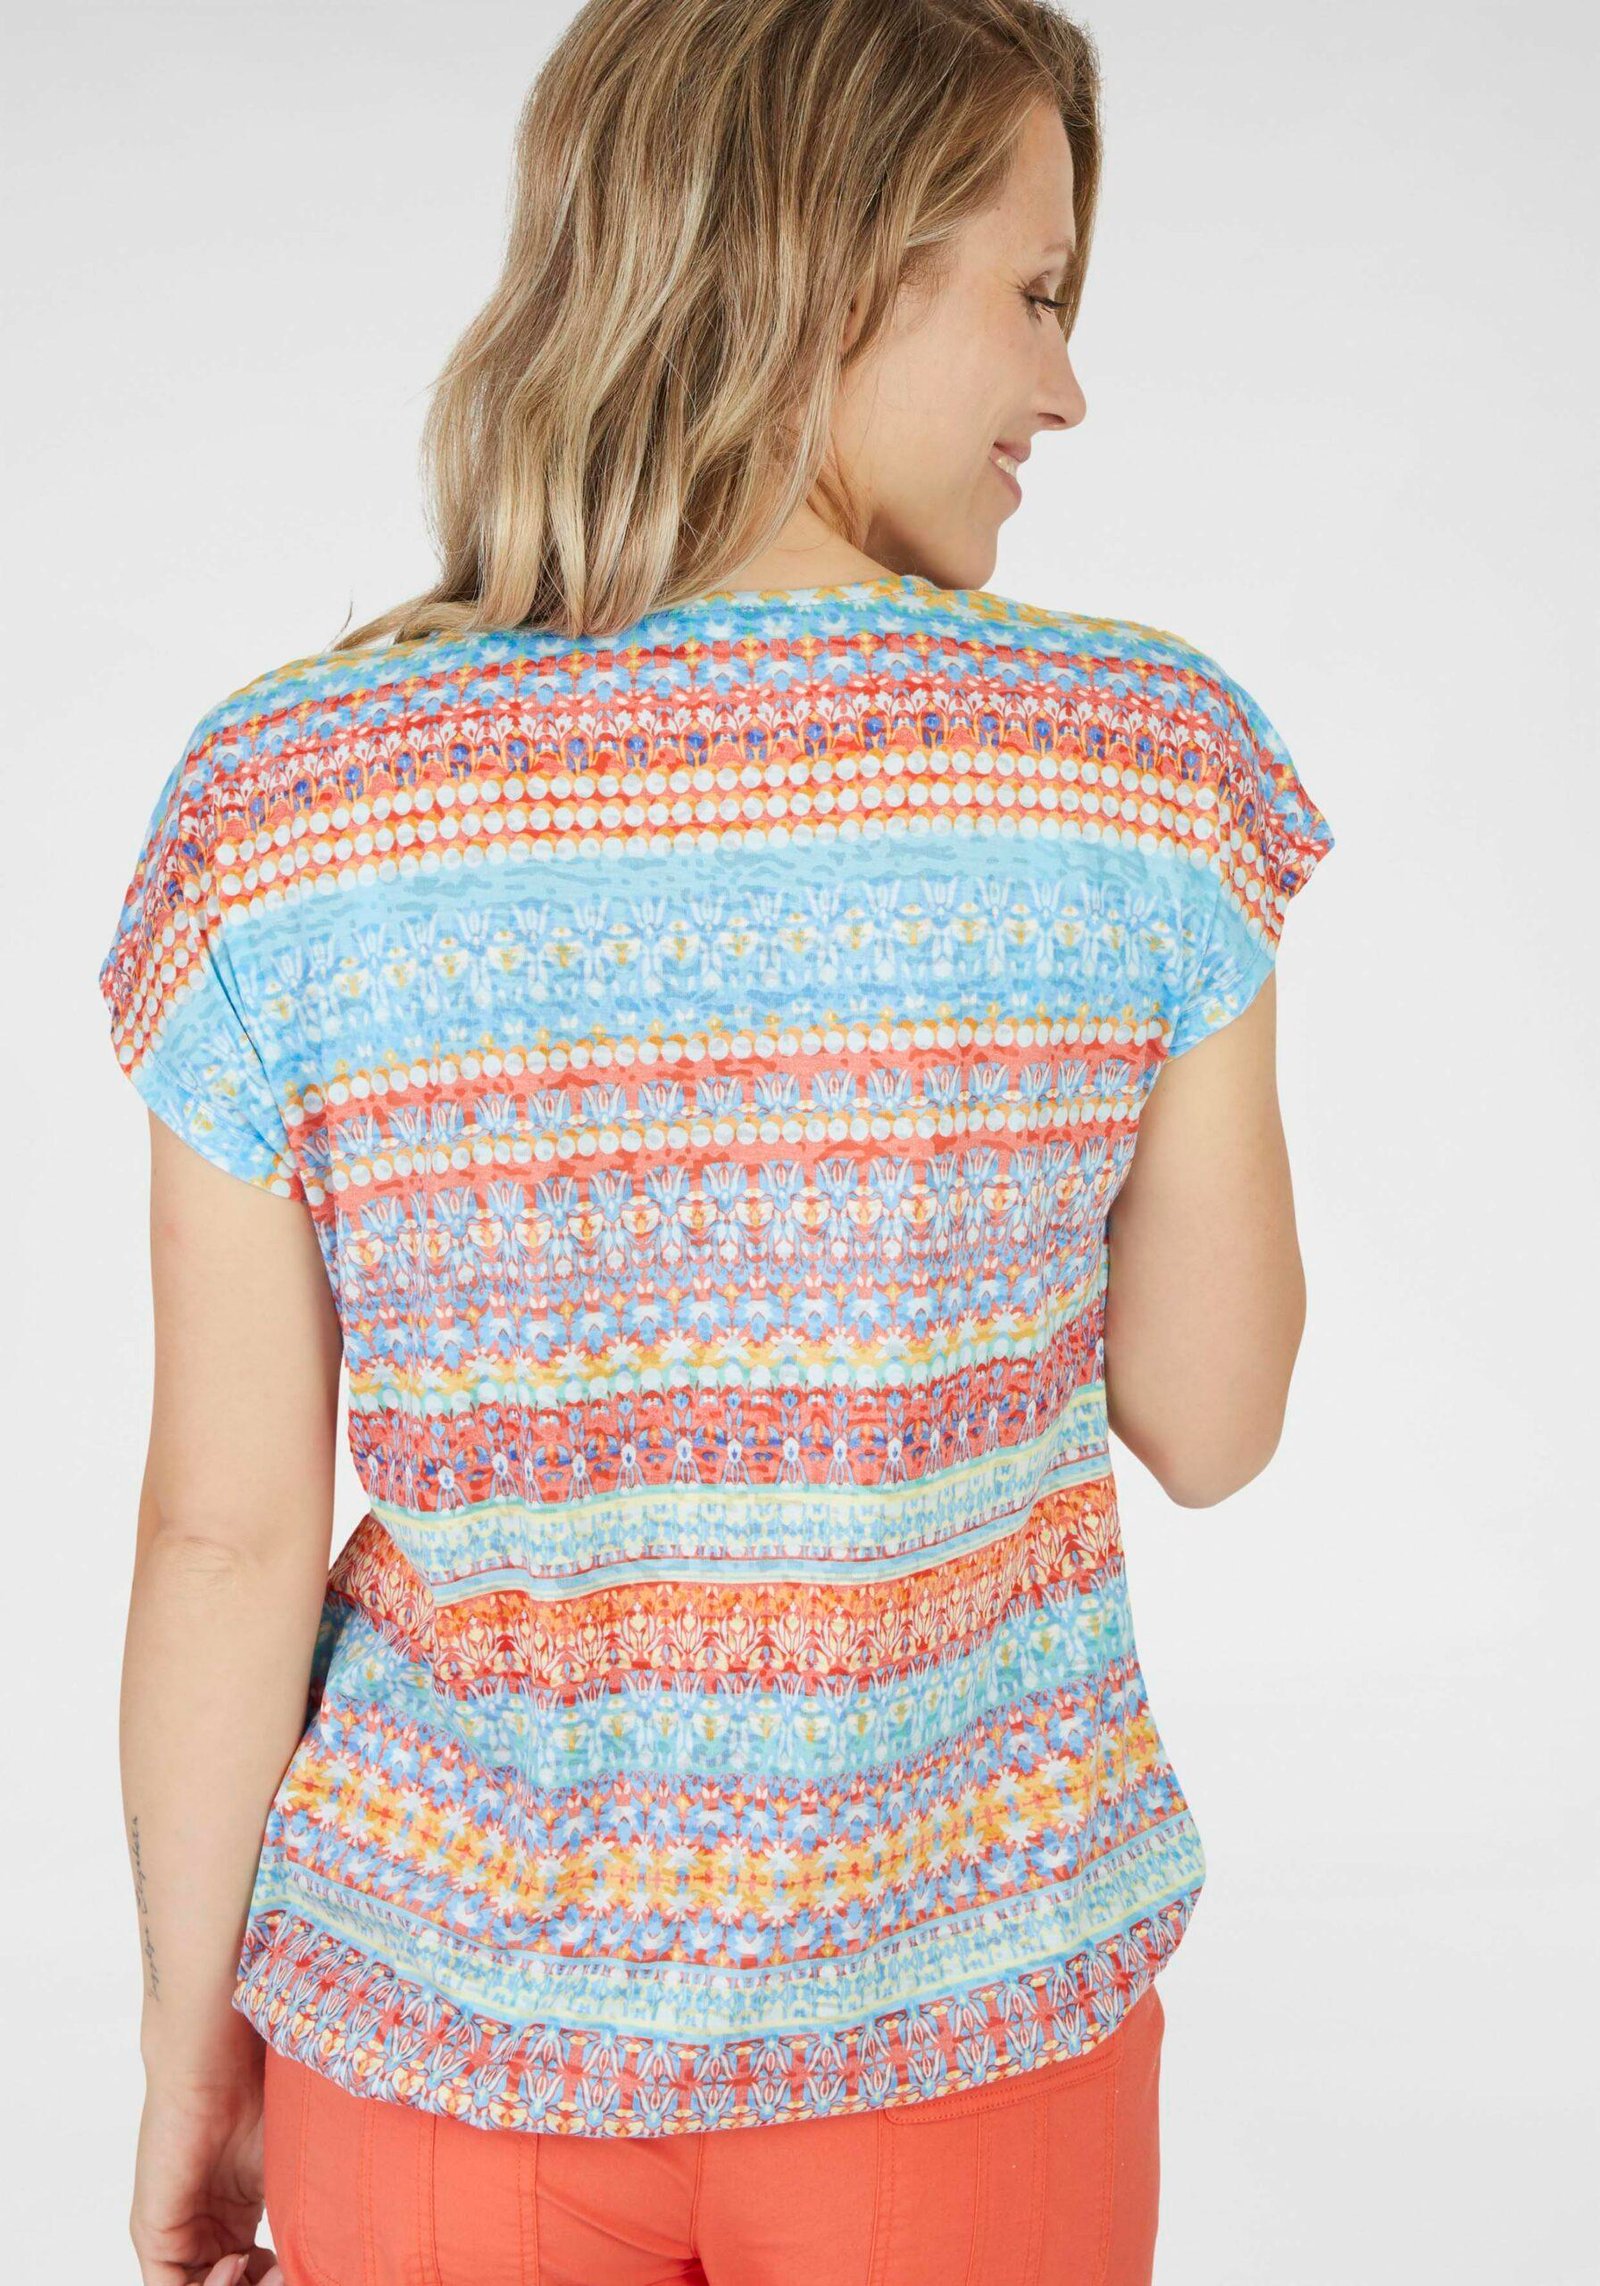 Damen Shirt mit Multicolour-Muster